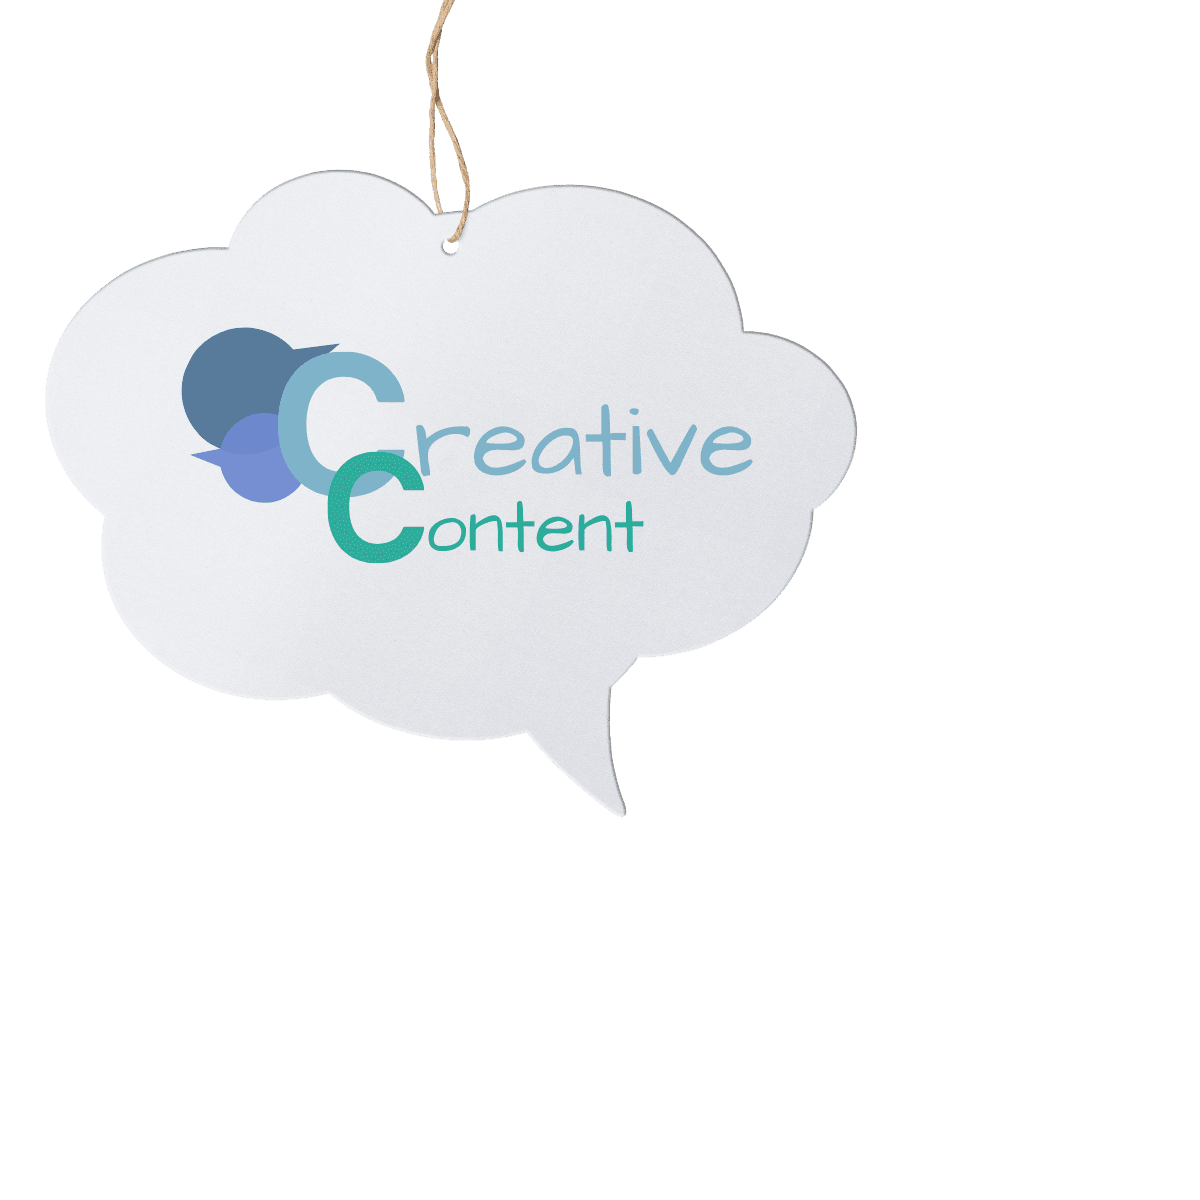 Creative content